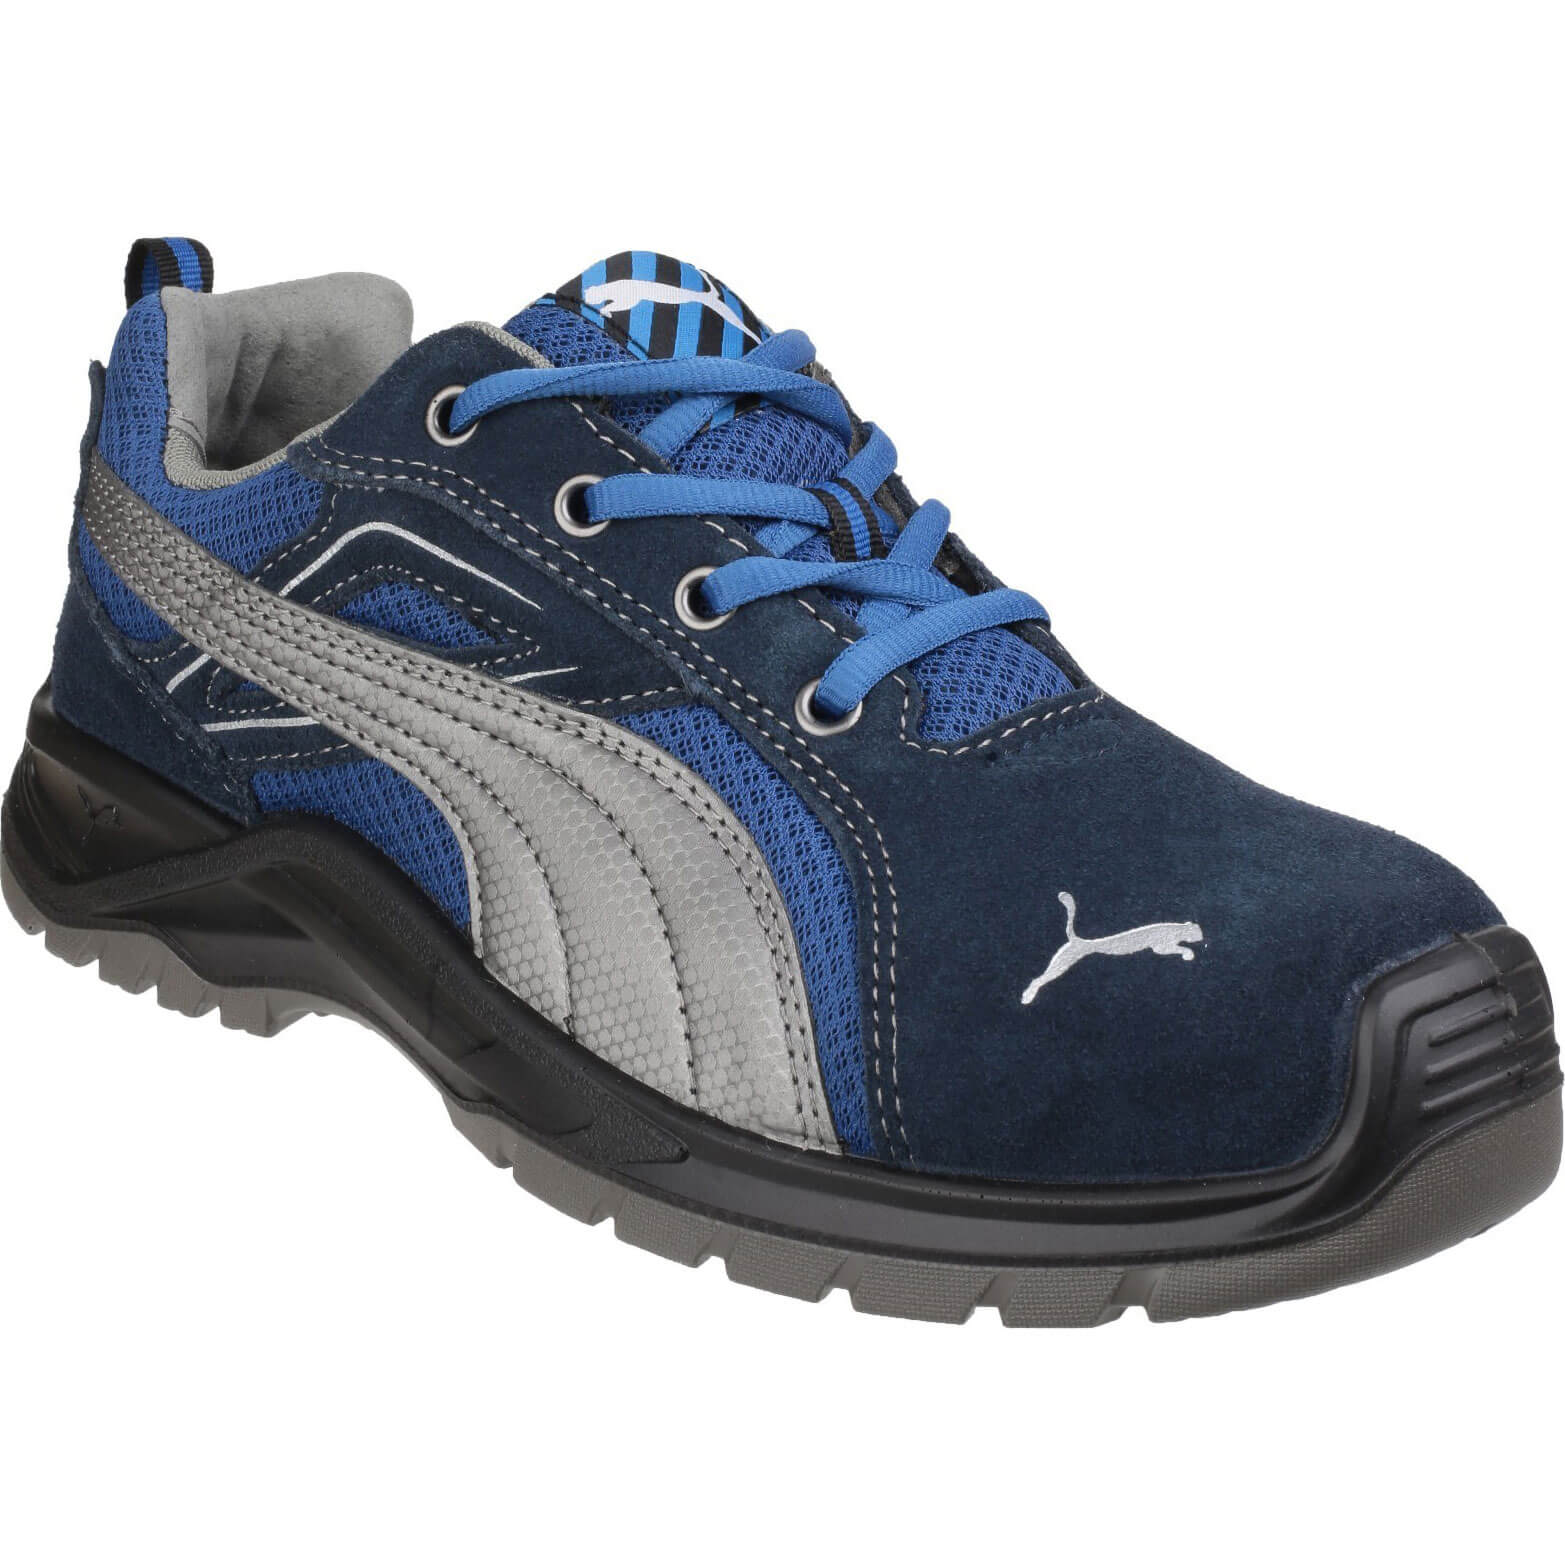 Image of Puma Safety Omni Sky Low Safety Shoe Blue Size 12